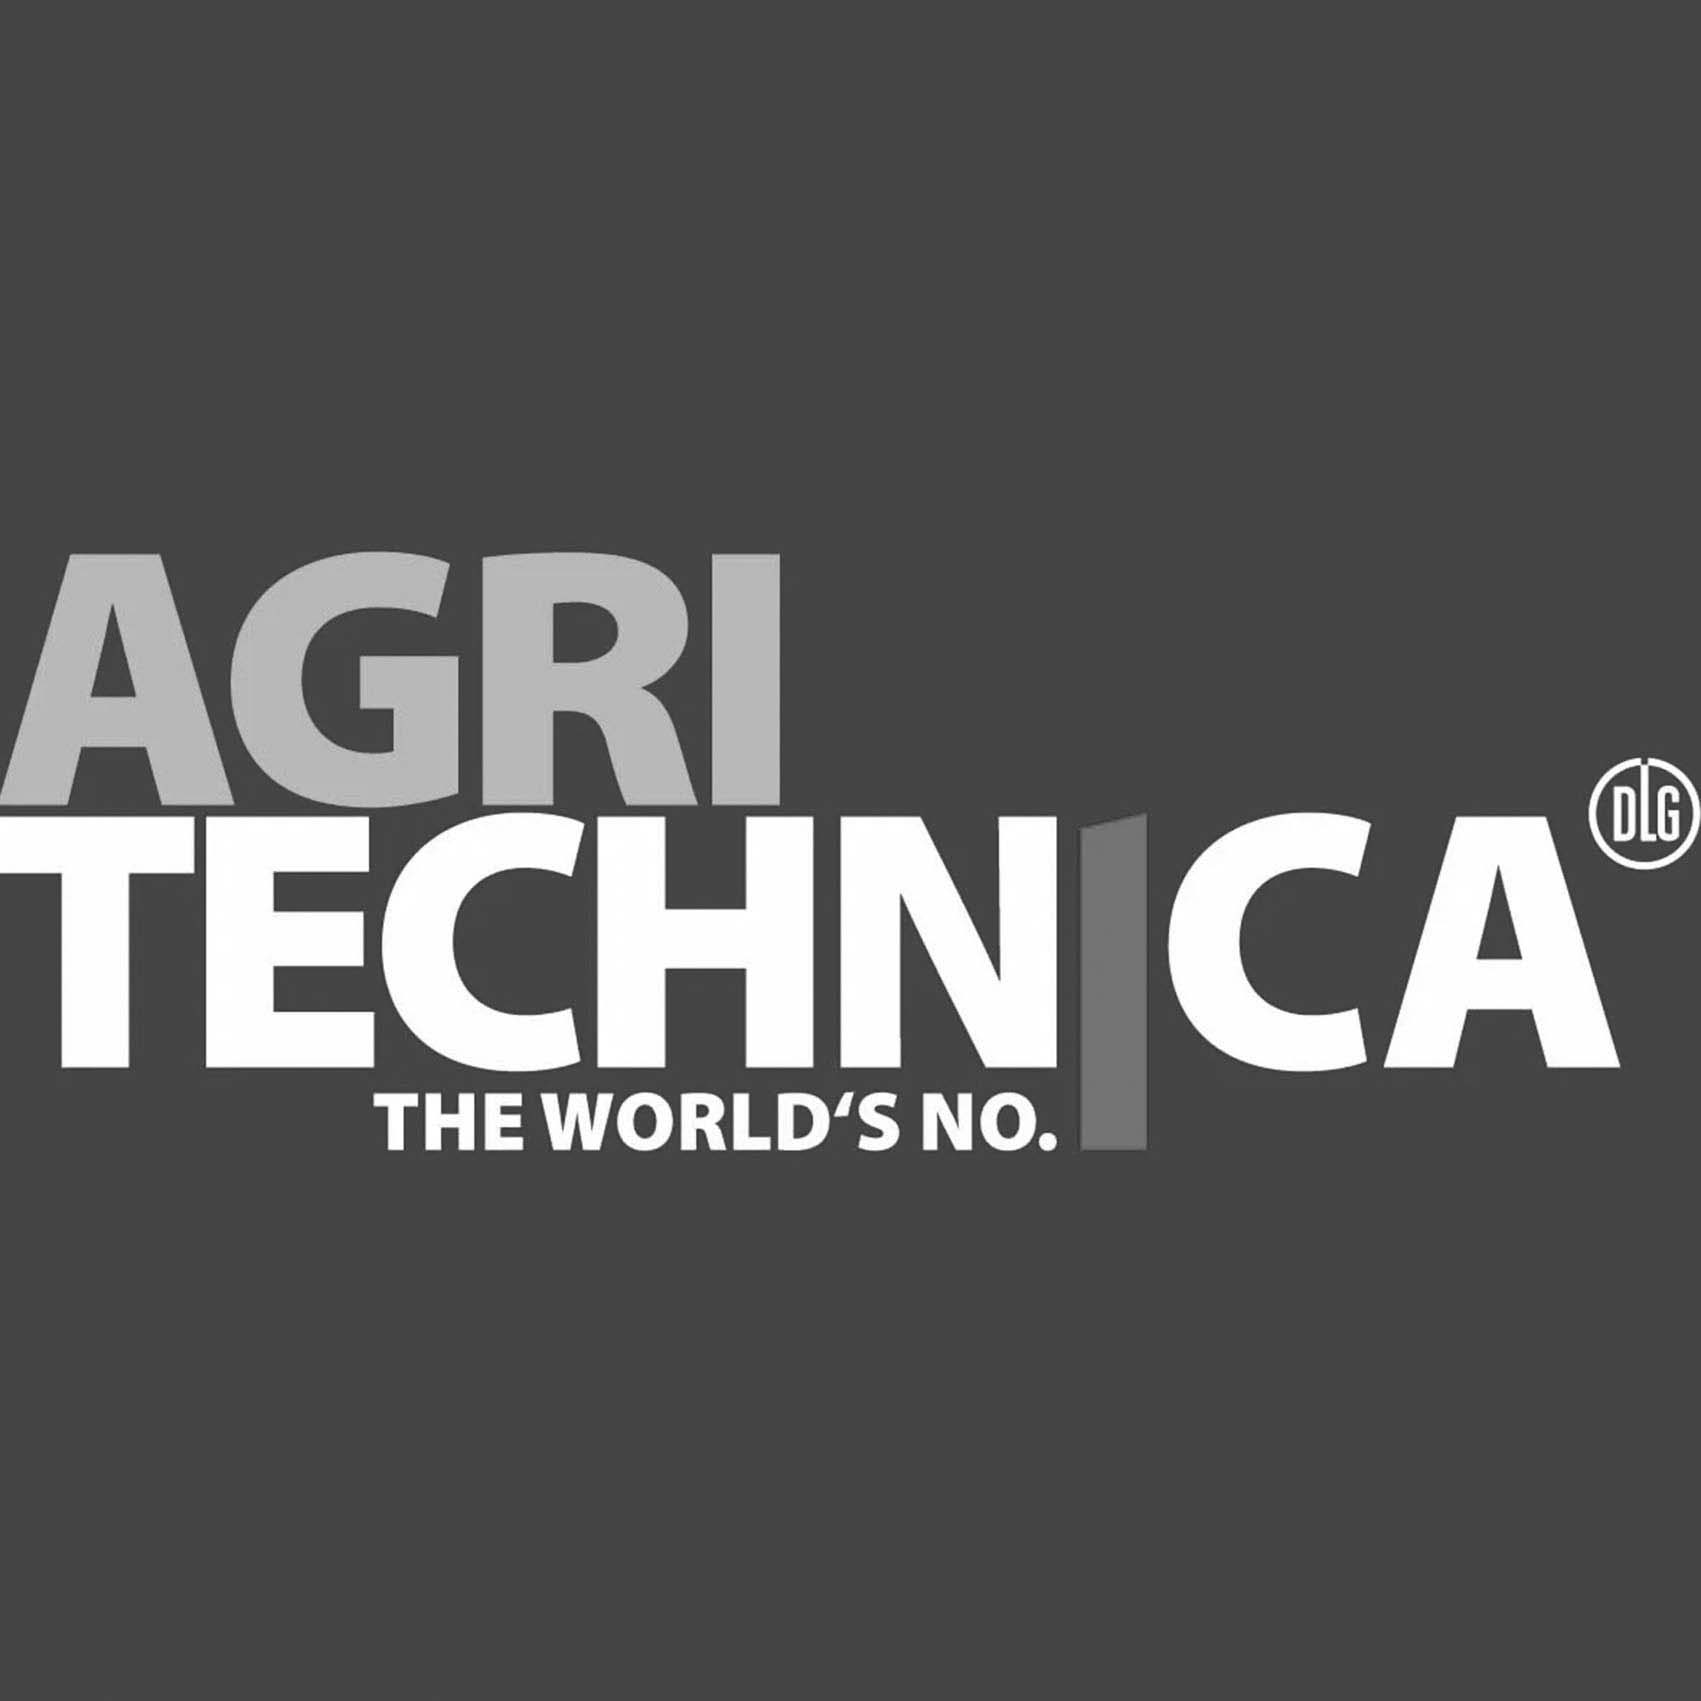 Agritechnica Logo © 2021 DLG Service GmbH